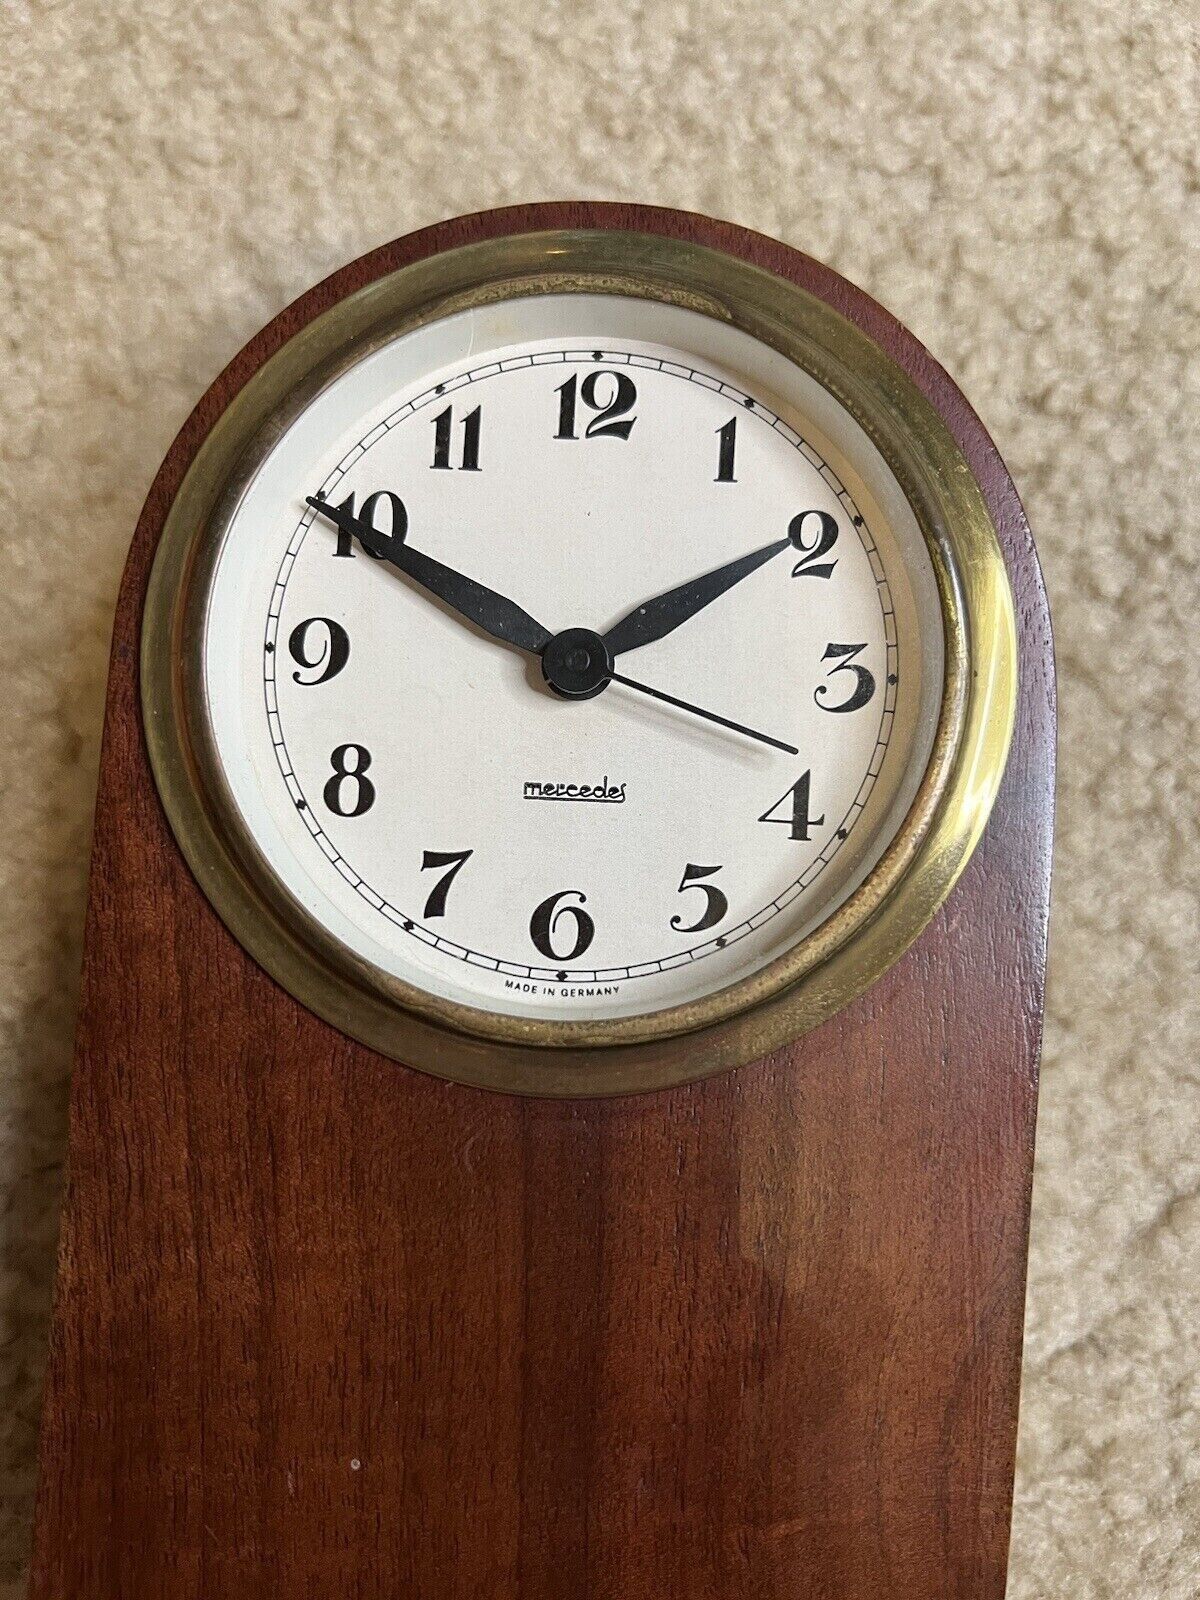 Vintage Mercedes Wooden Desk Clock in Good Working Condition.